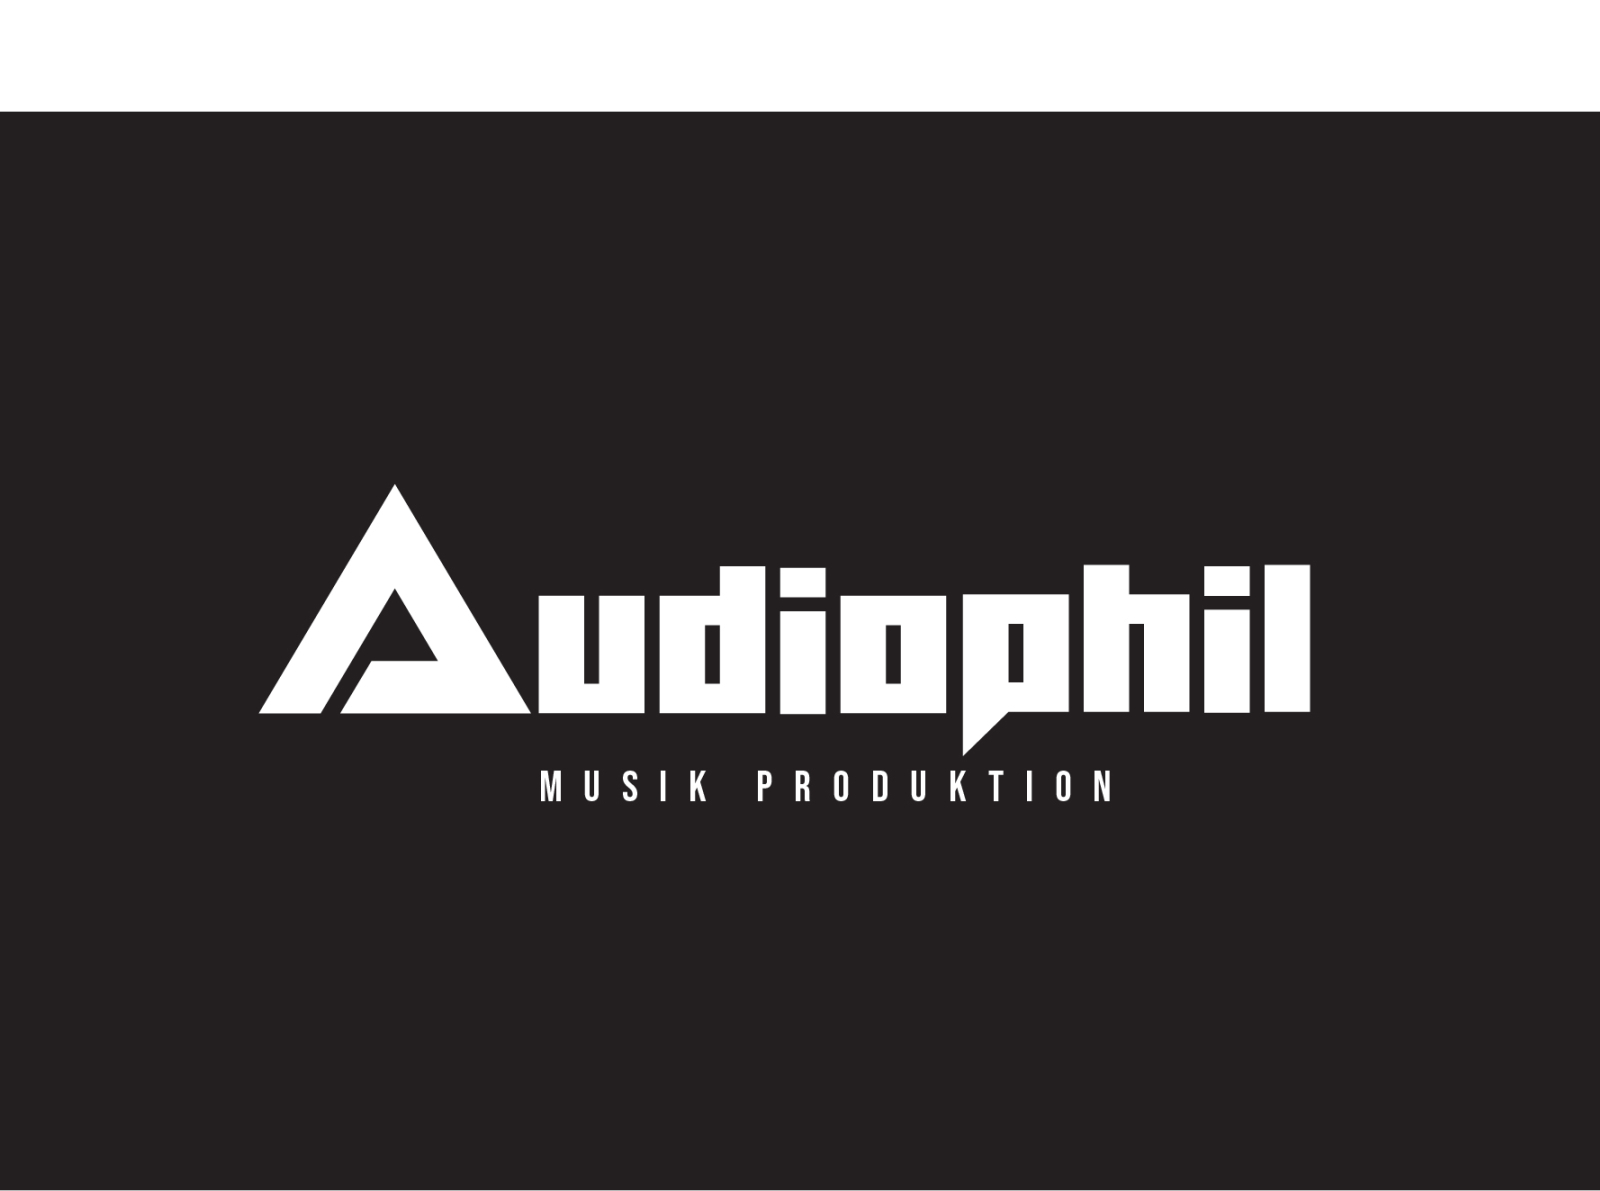 Music Production Logo Design by Rainessa Insera on Dribbble